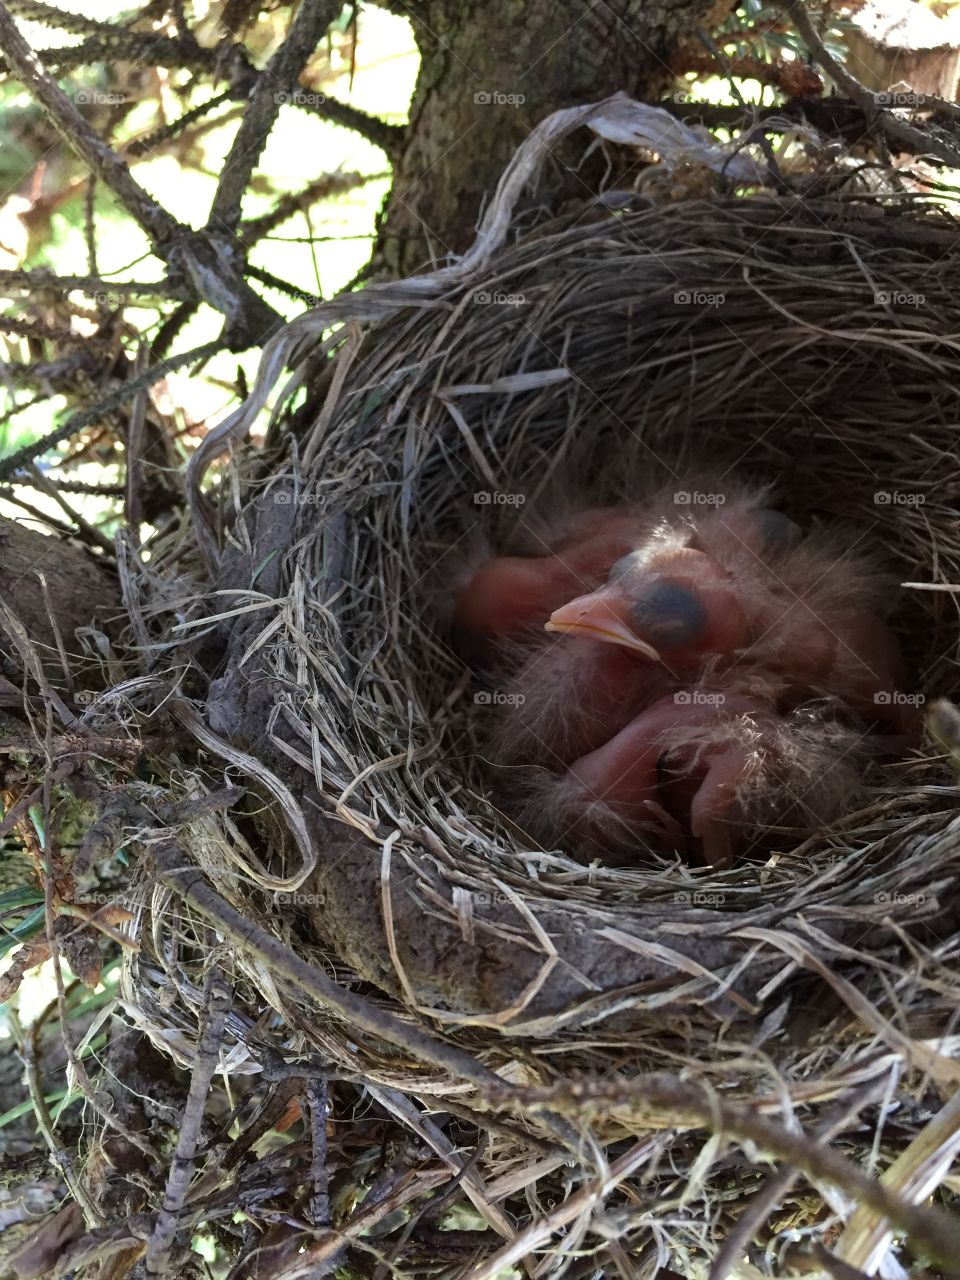 Newborn Robin babies